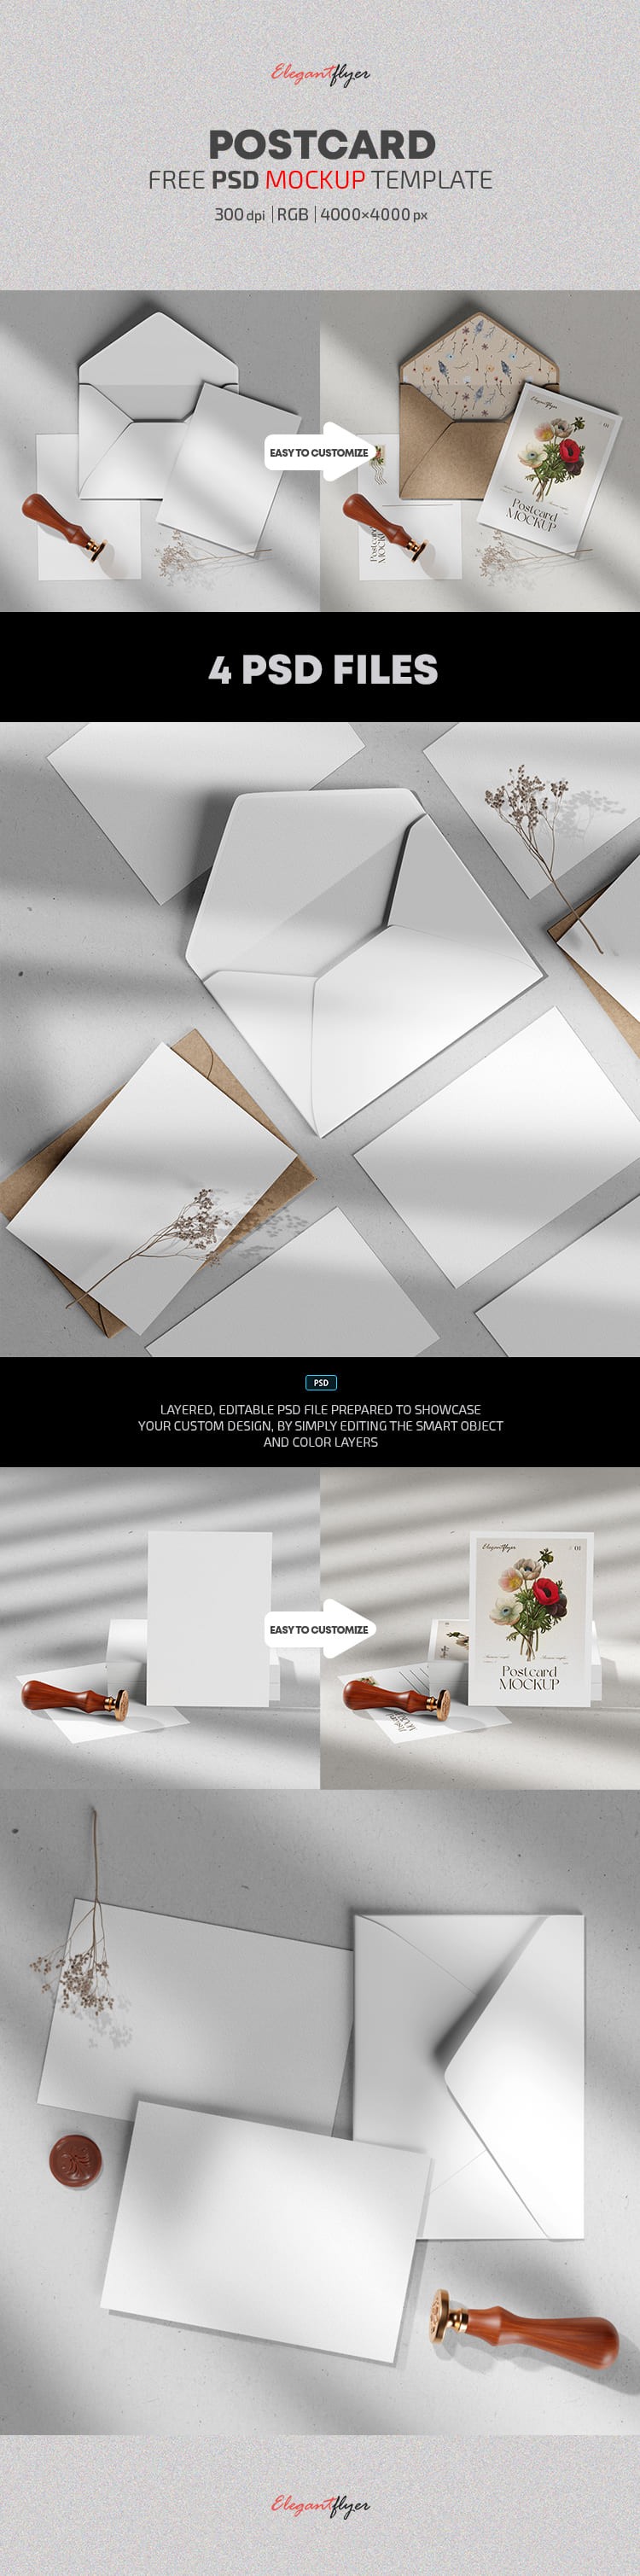 Maqueta de postal by ElegantFlyer